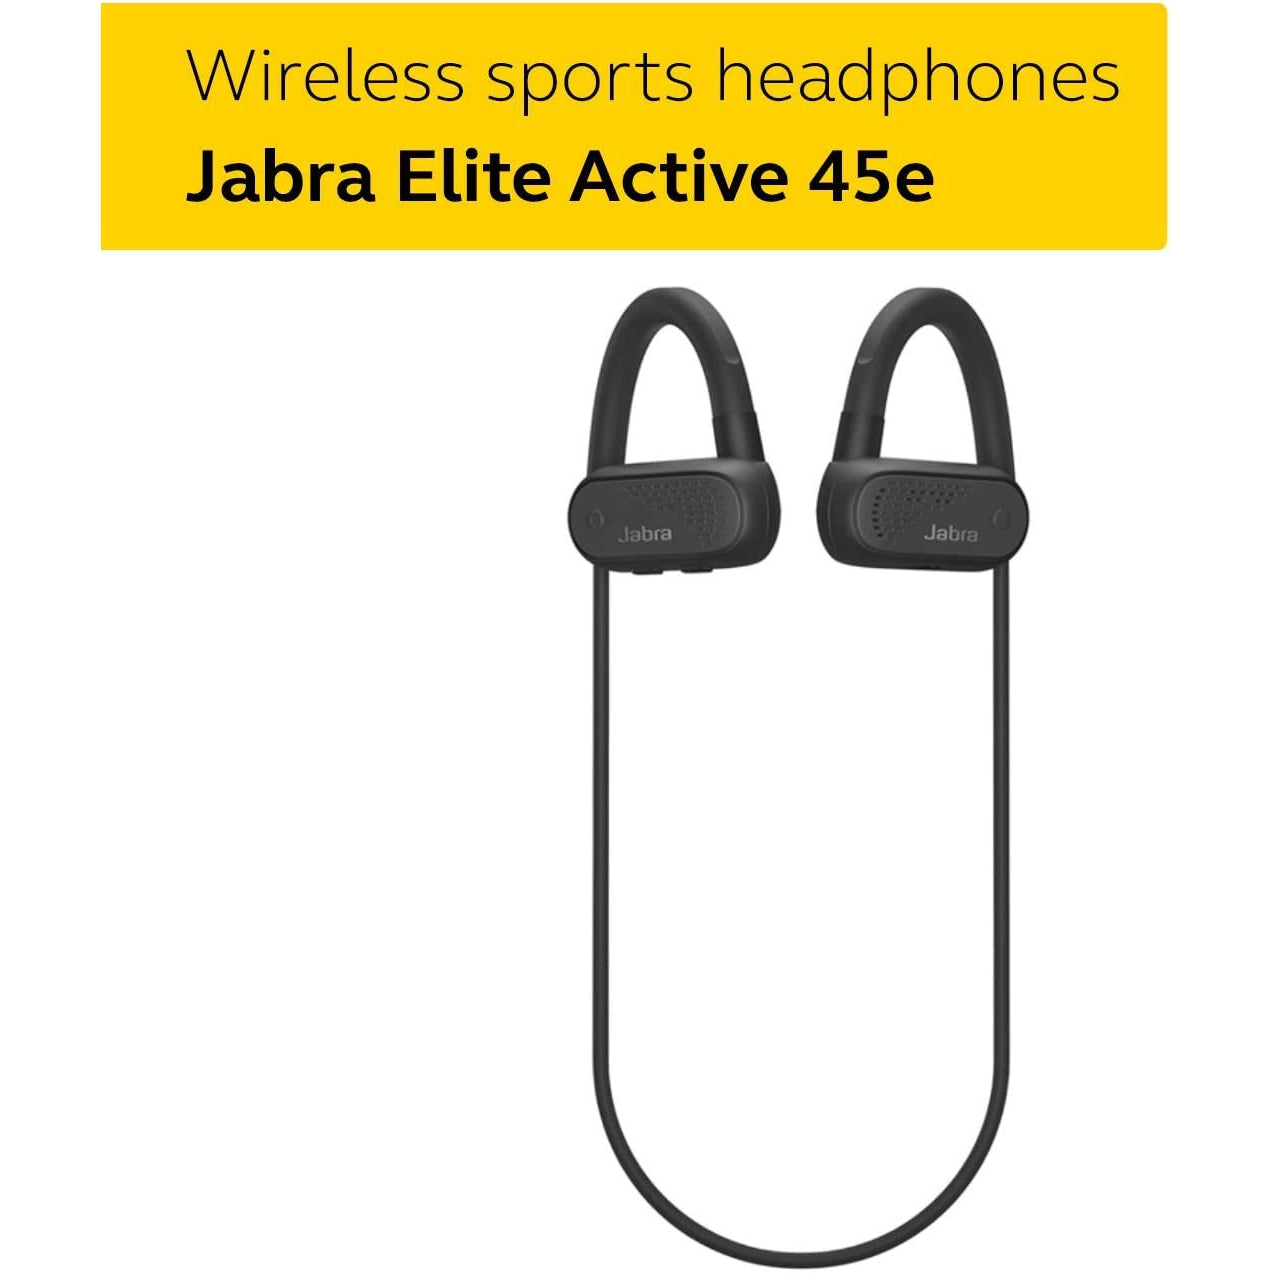 Jabra Elite Active 45e Wireless Bluetooth Headphones - Refurbished Good